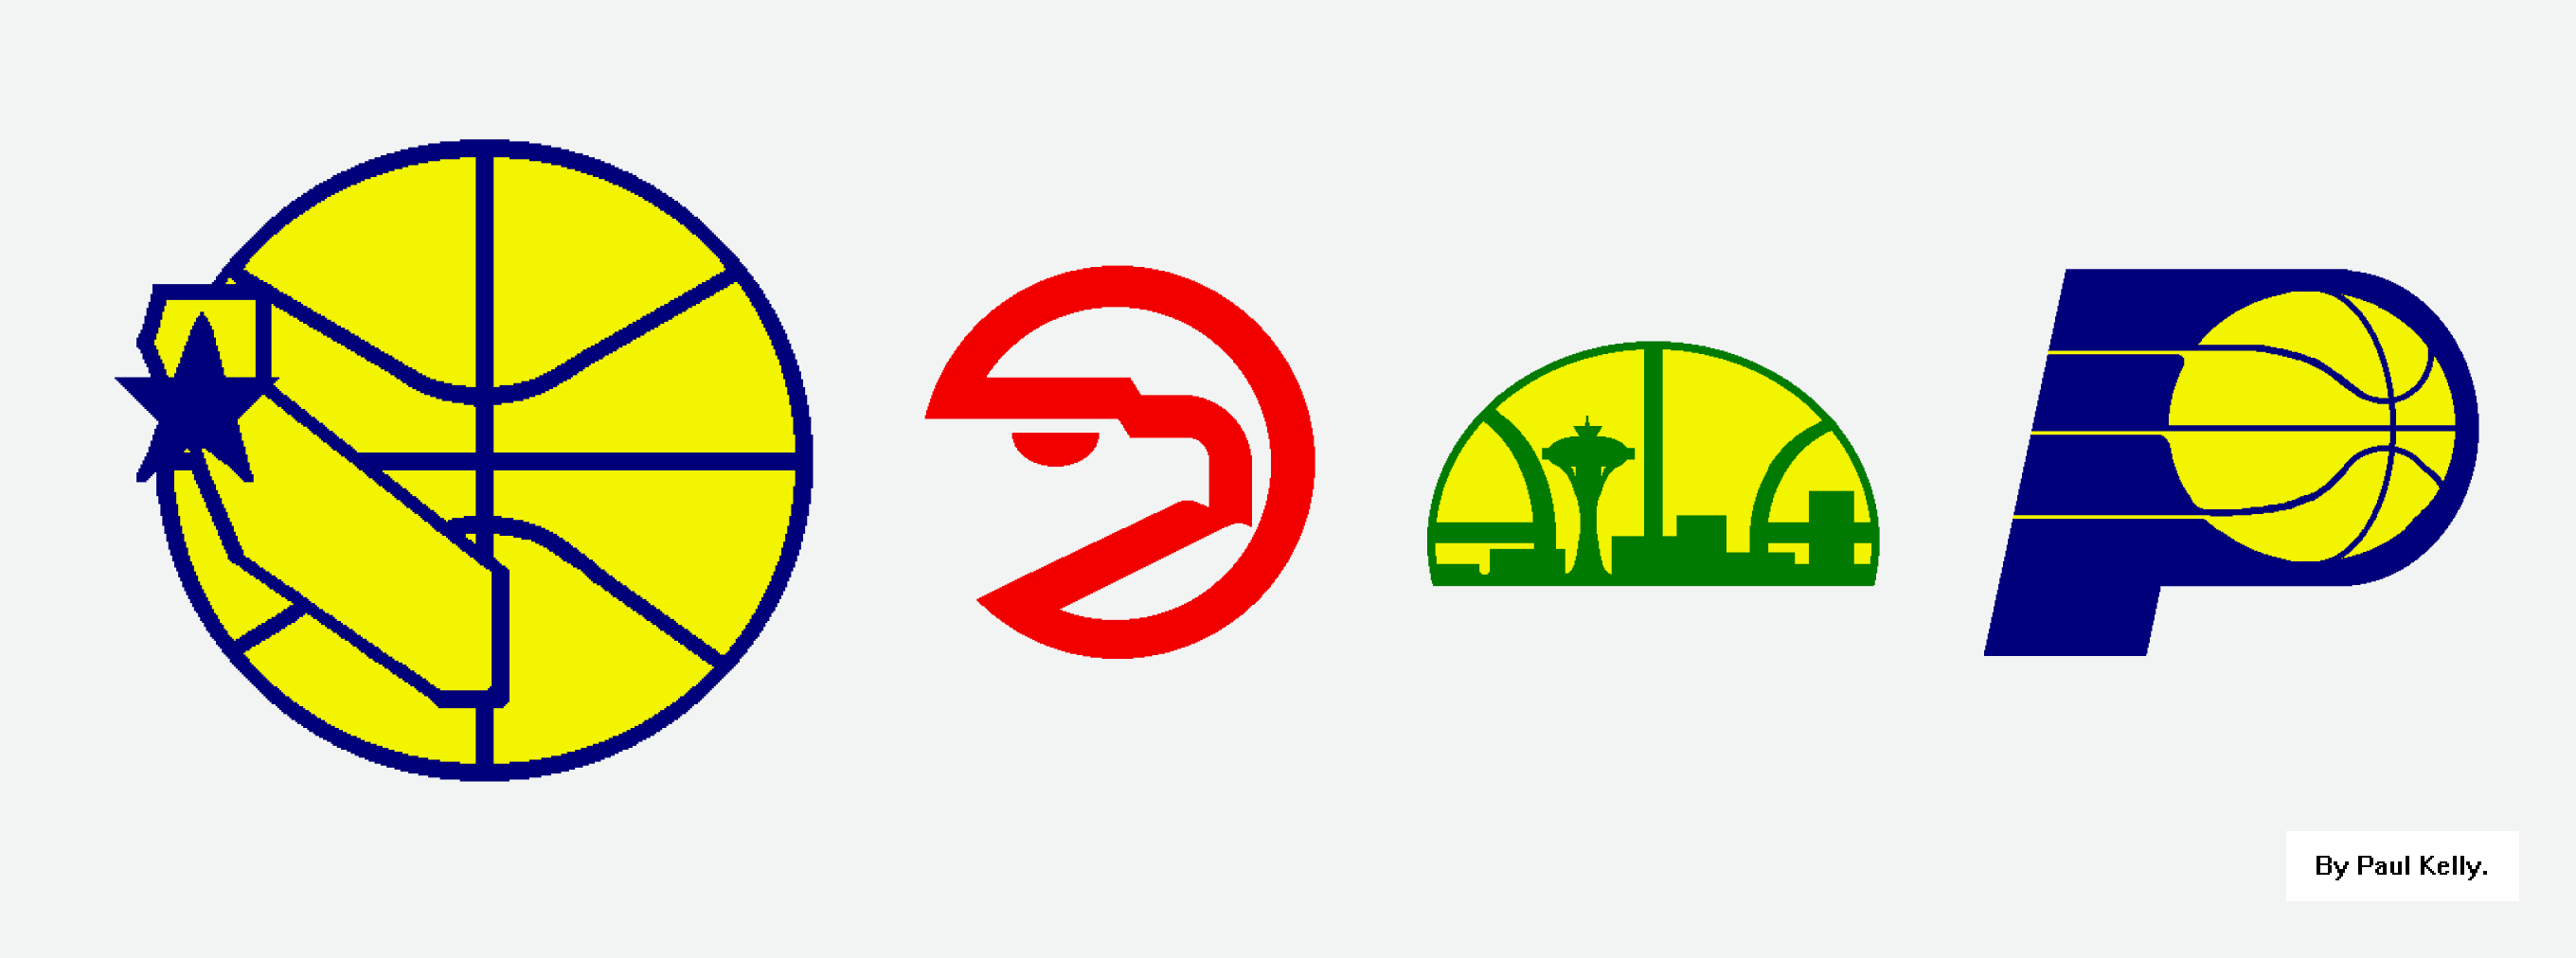 NBA team logos recreated with MS Paint circa 1994.